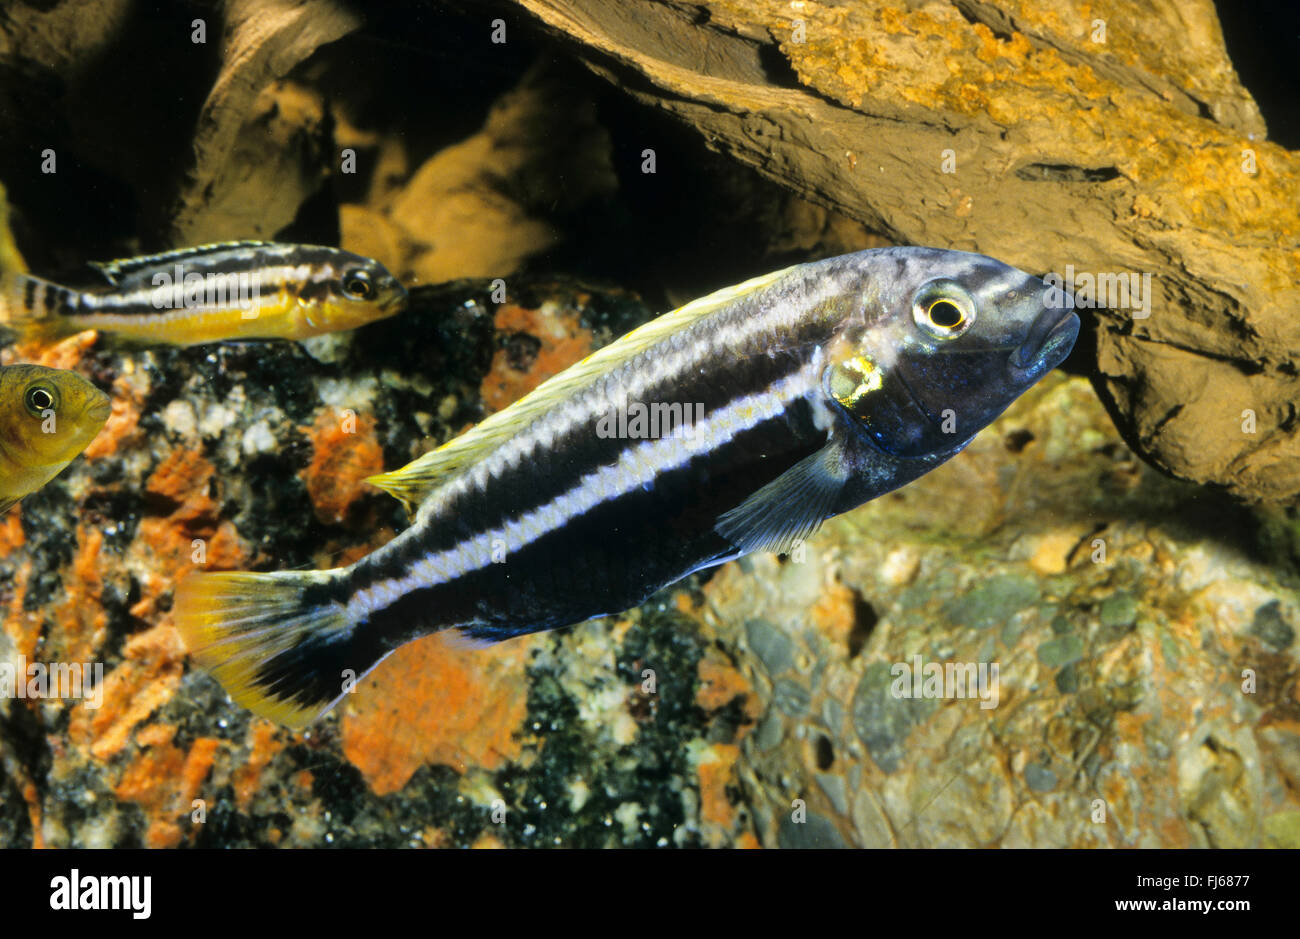 Golden mbuna, Auratus cichlid, Malawi golden cichlid (Melanochromis auratus, Pseudotropheus auratus), male and female Stock Photo